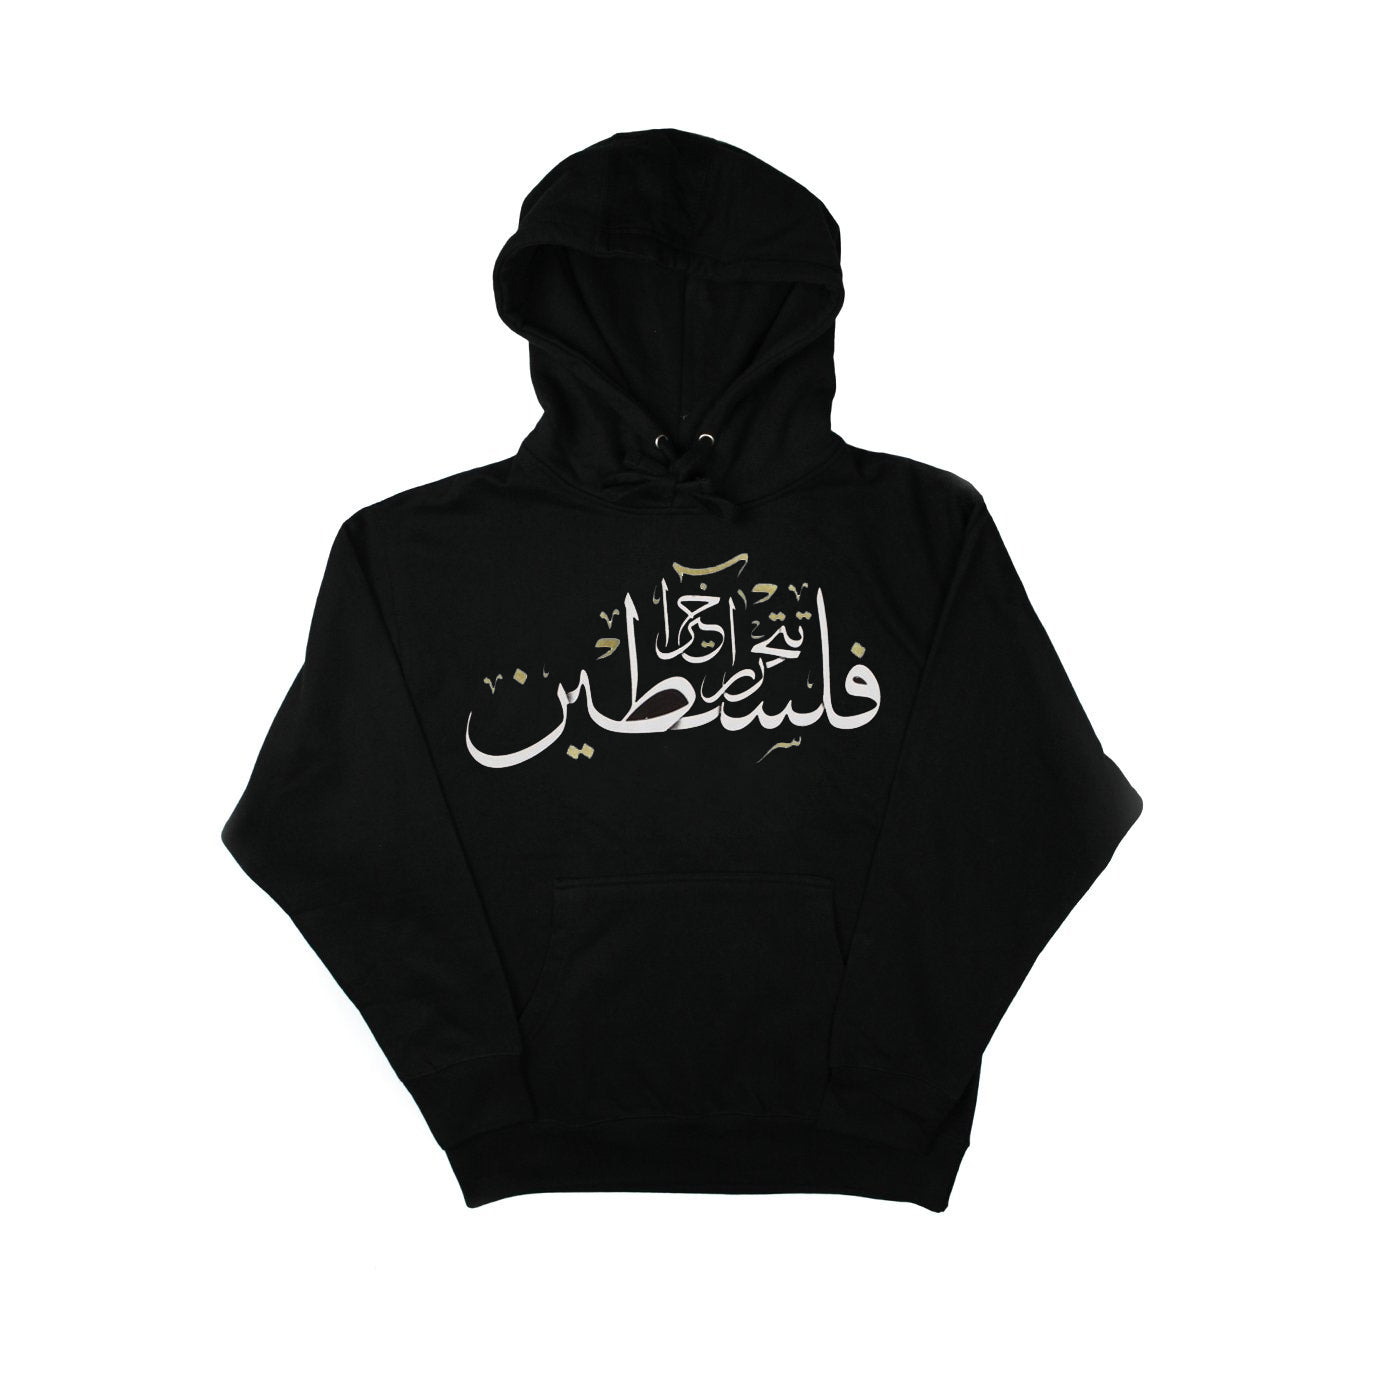 Palestine will be free Arabic calligraphy hoodie sweater